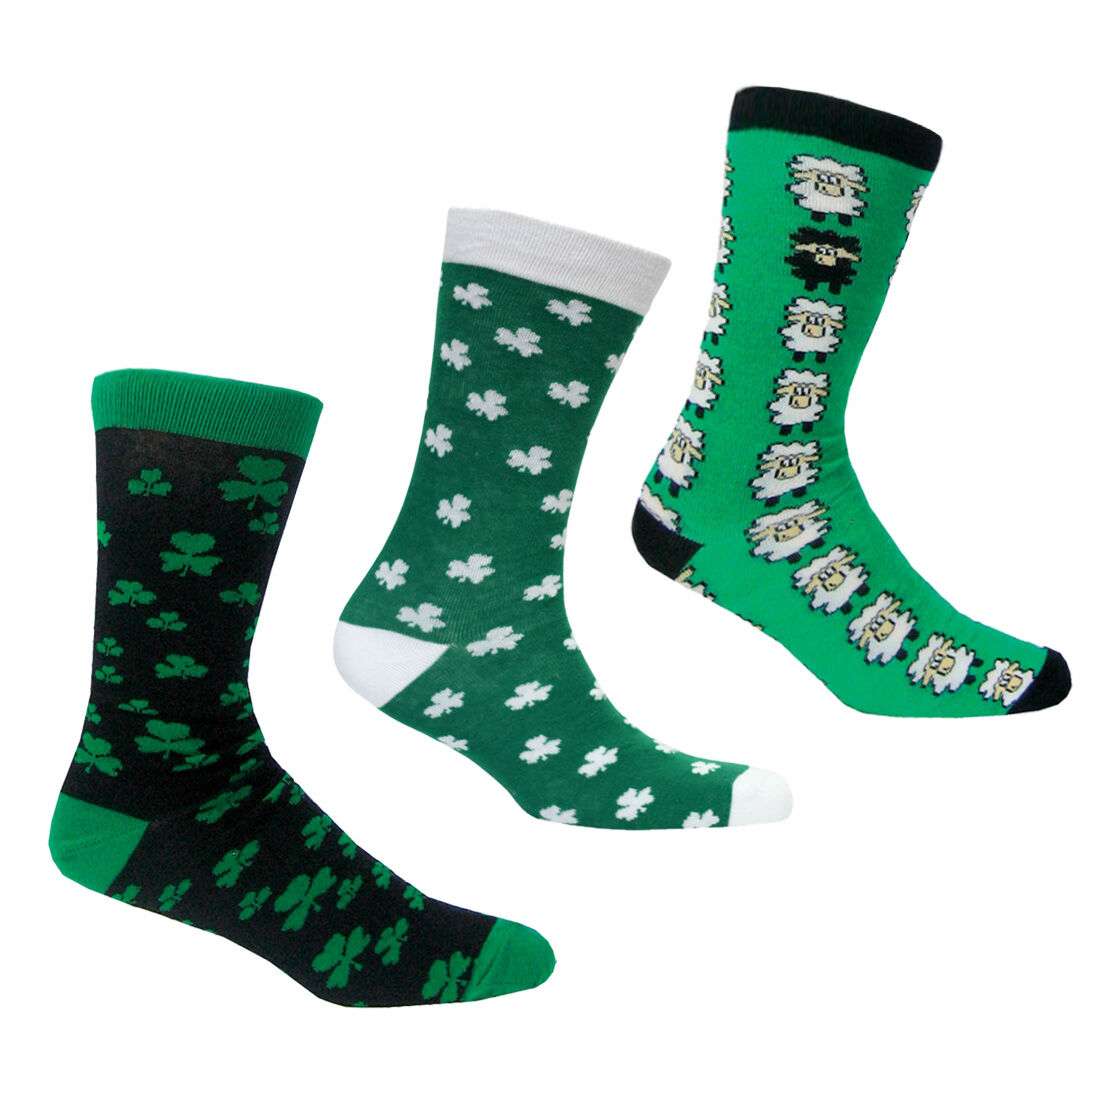 Buy Set of 3 Irish Designed Socks - Green Shamrock Design, White ...